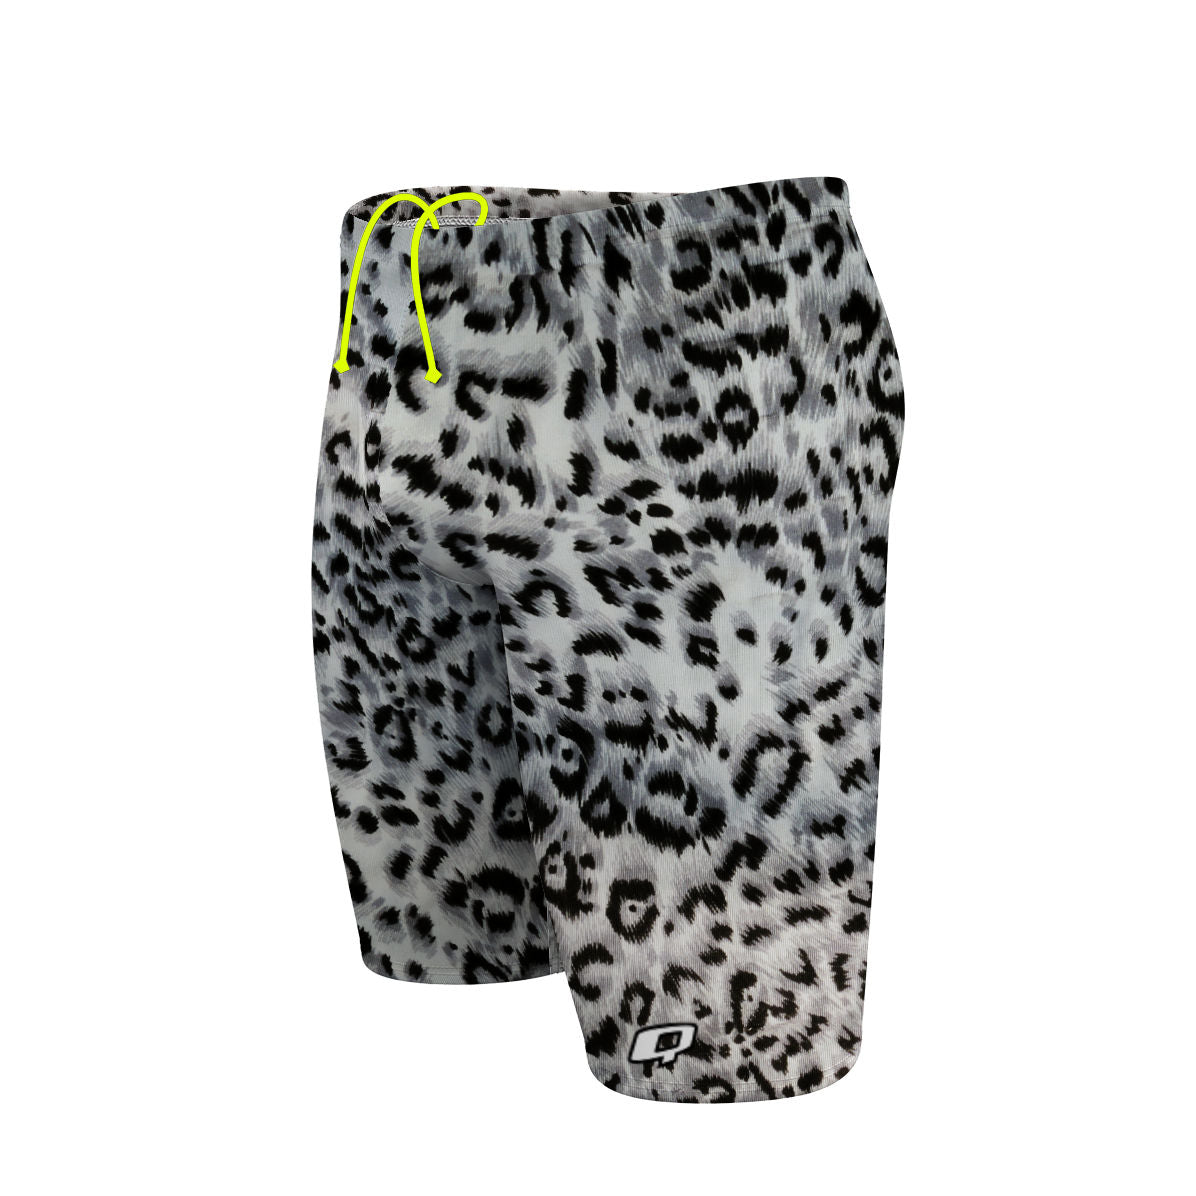 Leopard - Jammer Swimsuit